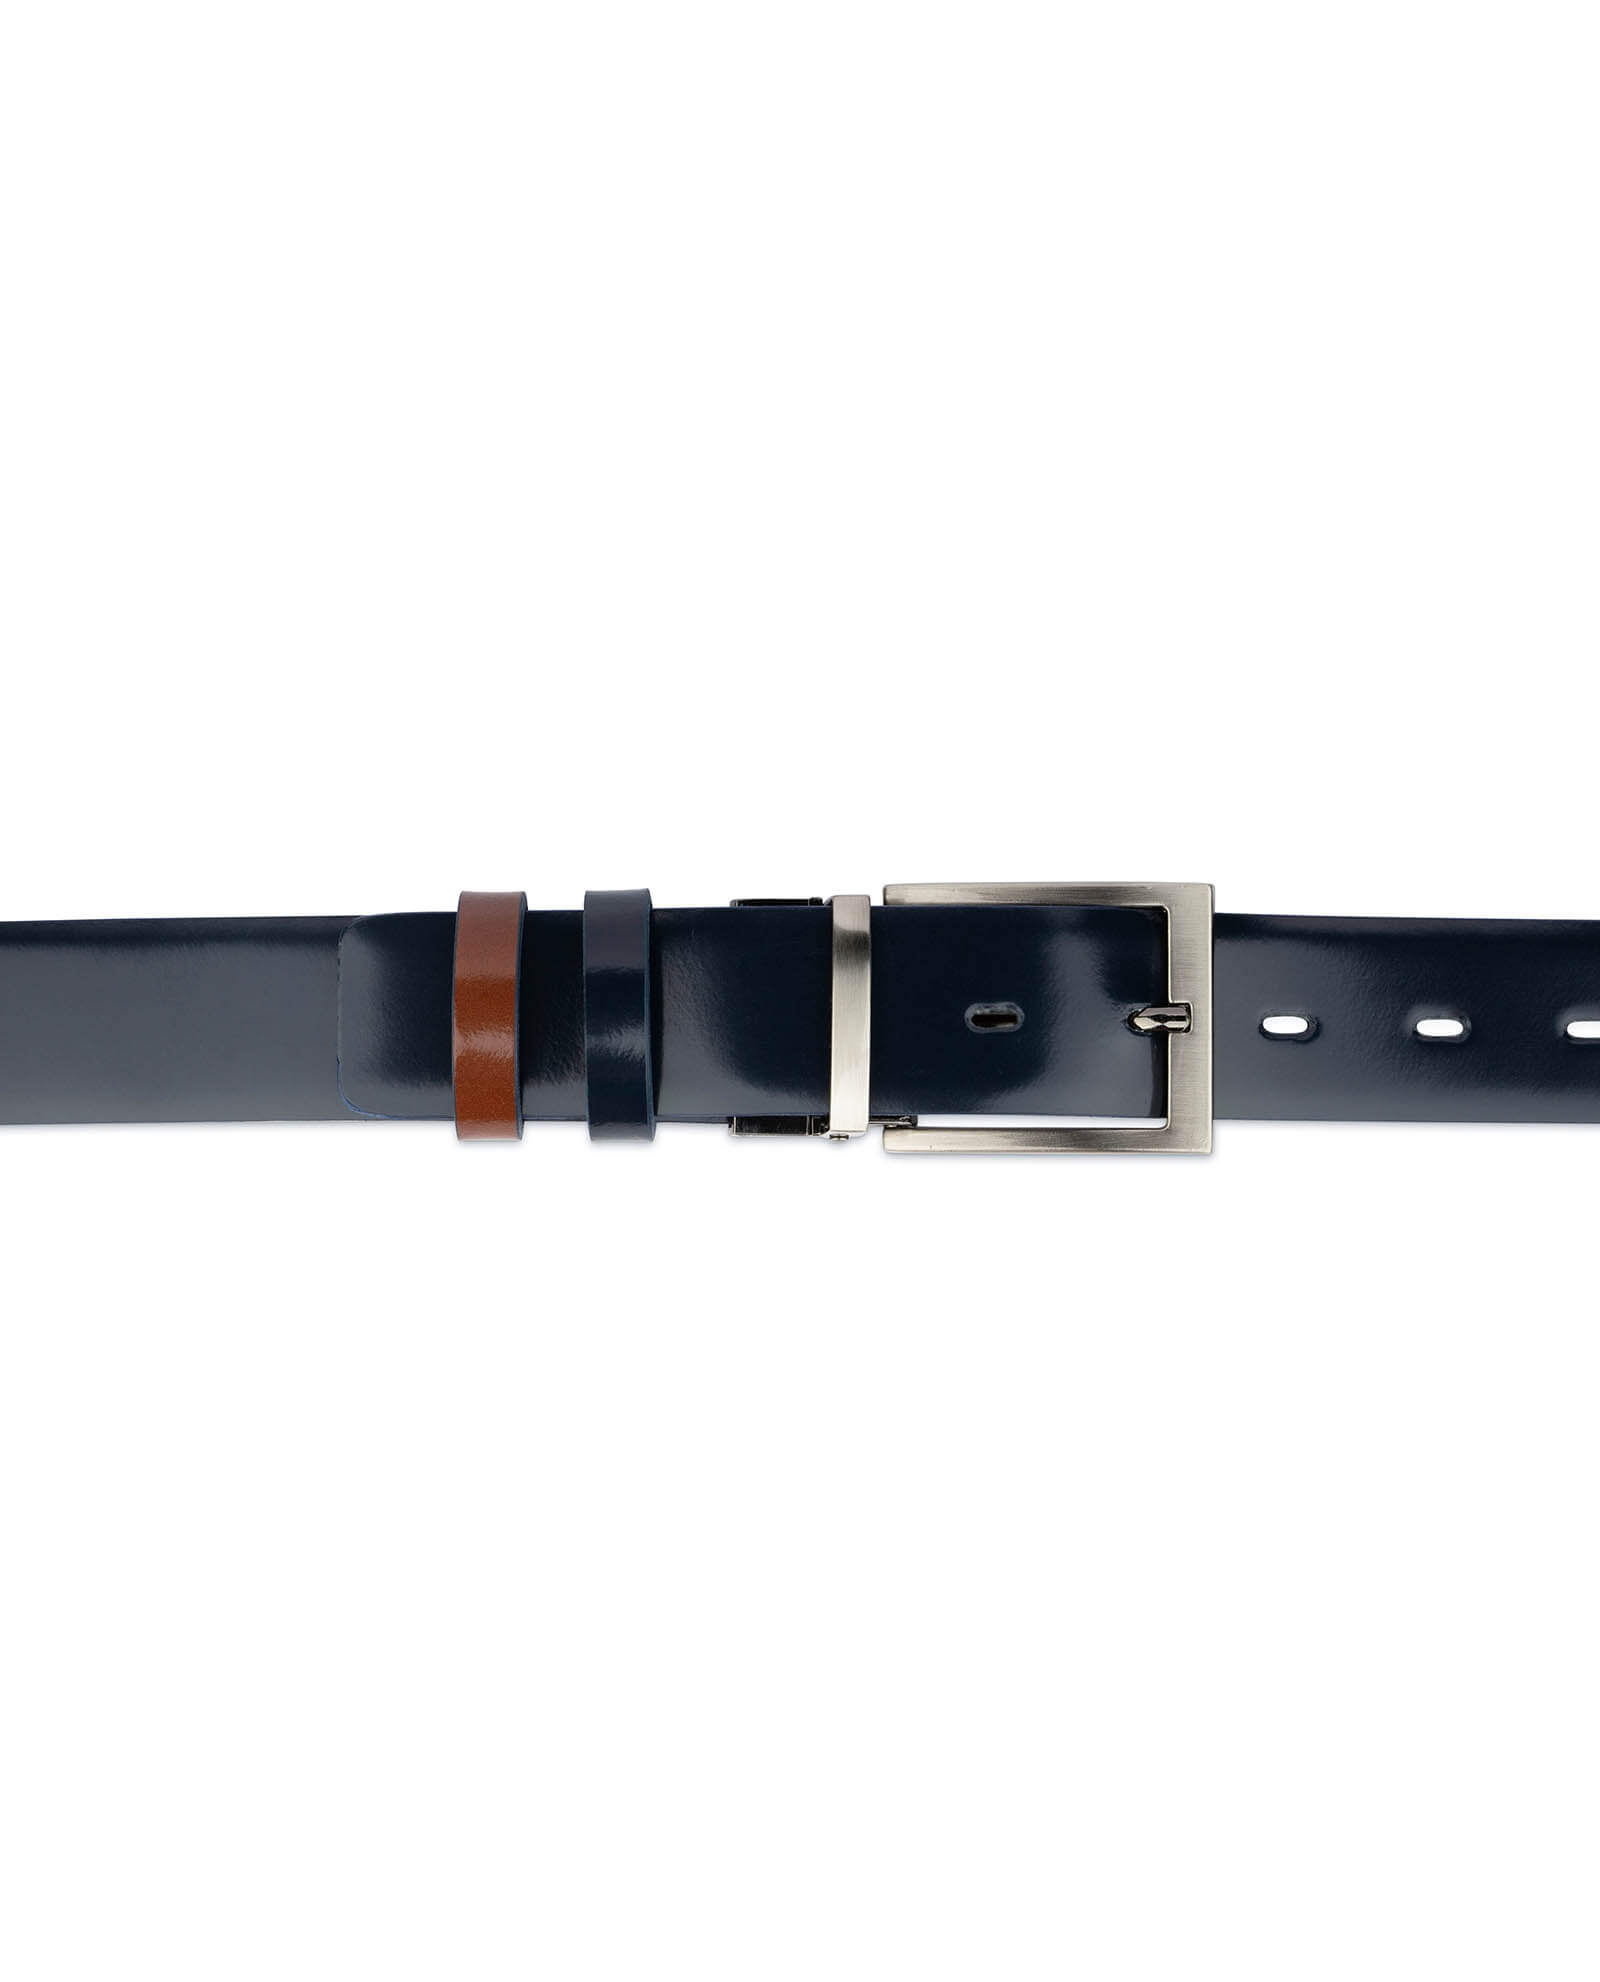 Buy Men's Belt Reversible Navy Blue Brown - 3.5cm | LeatherBeltsOnline